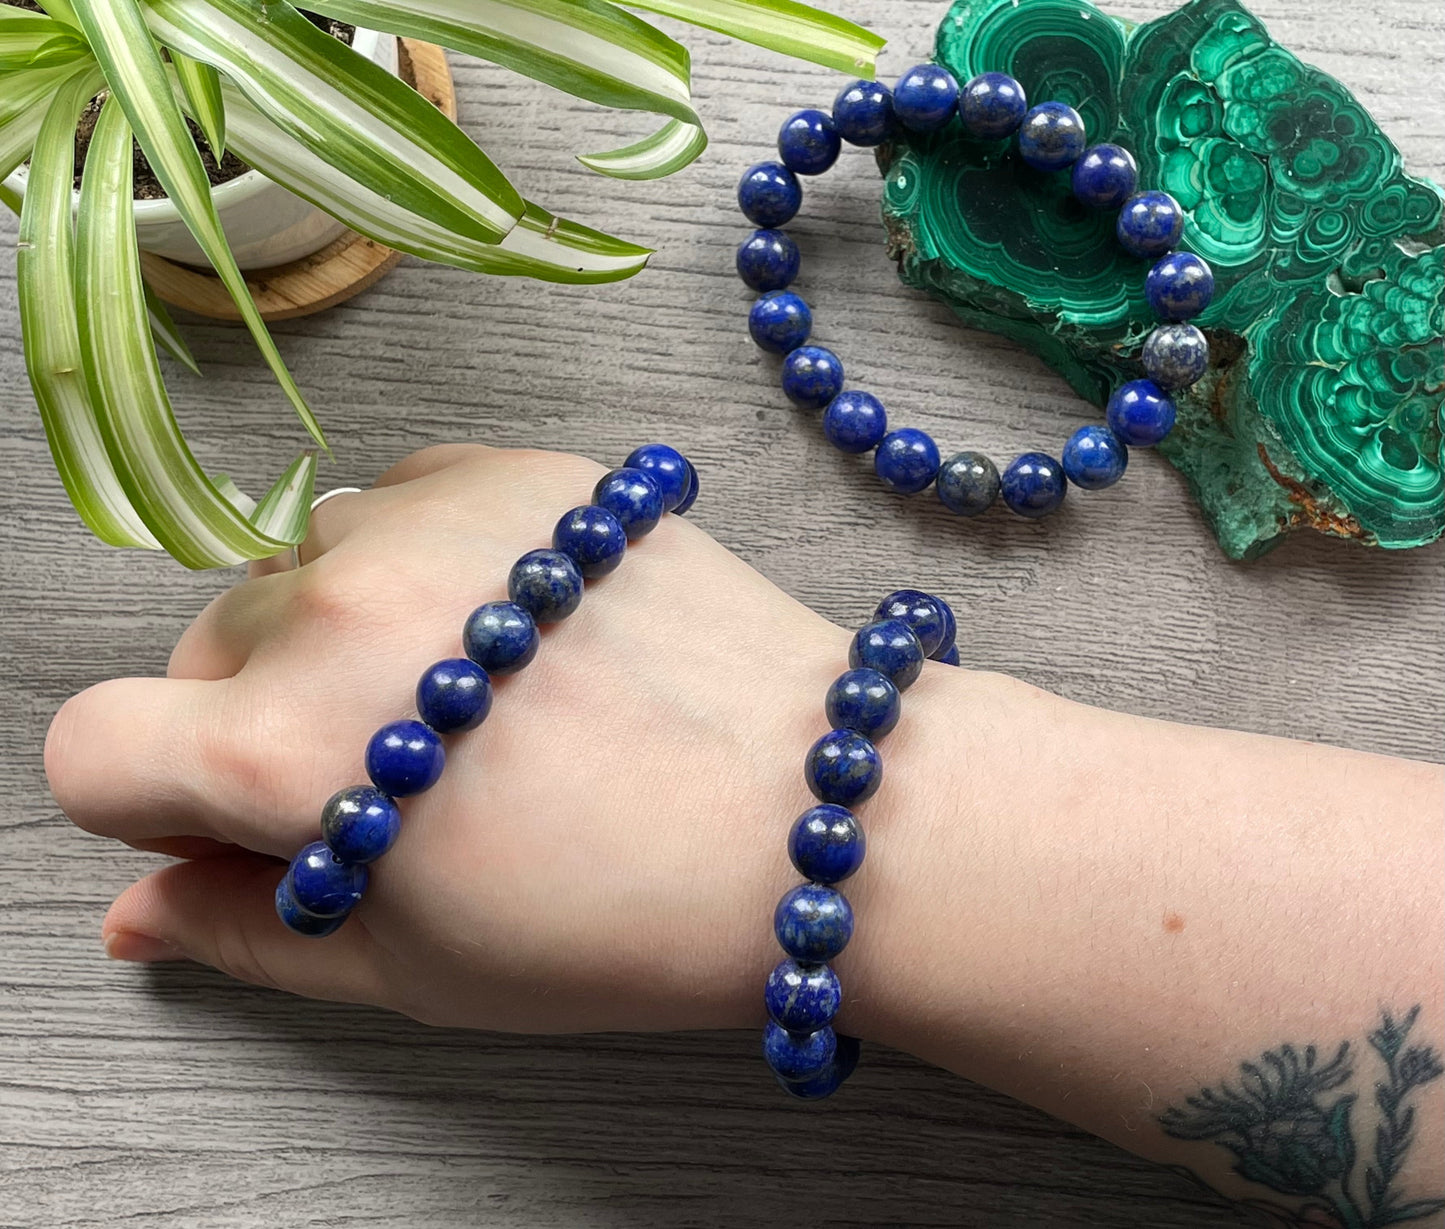 Pictured is a lapis lazuli bracelet.